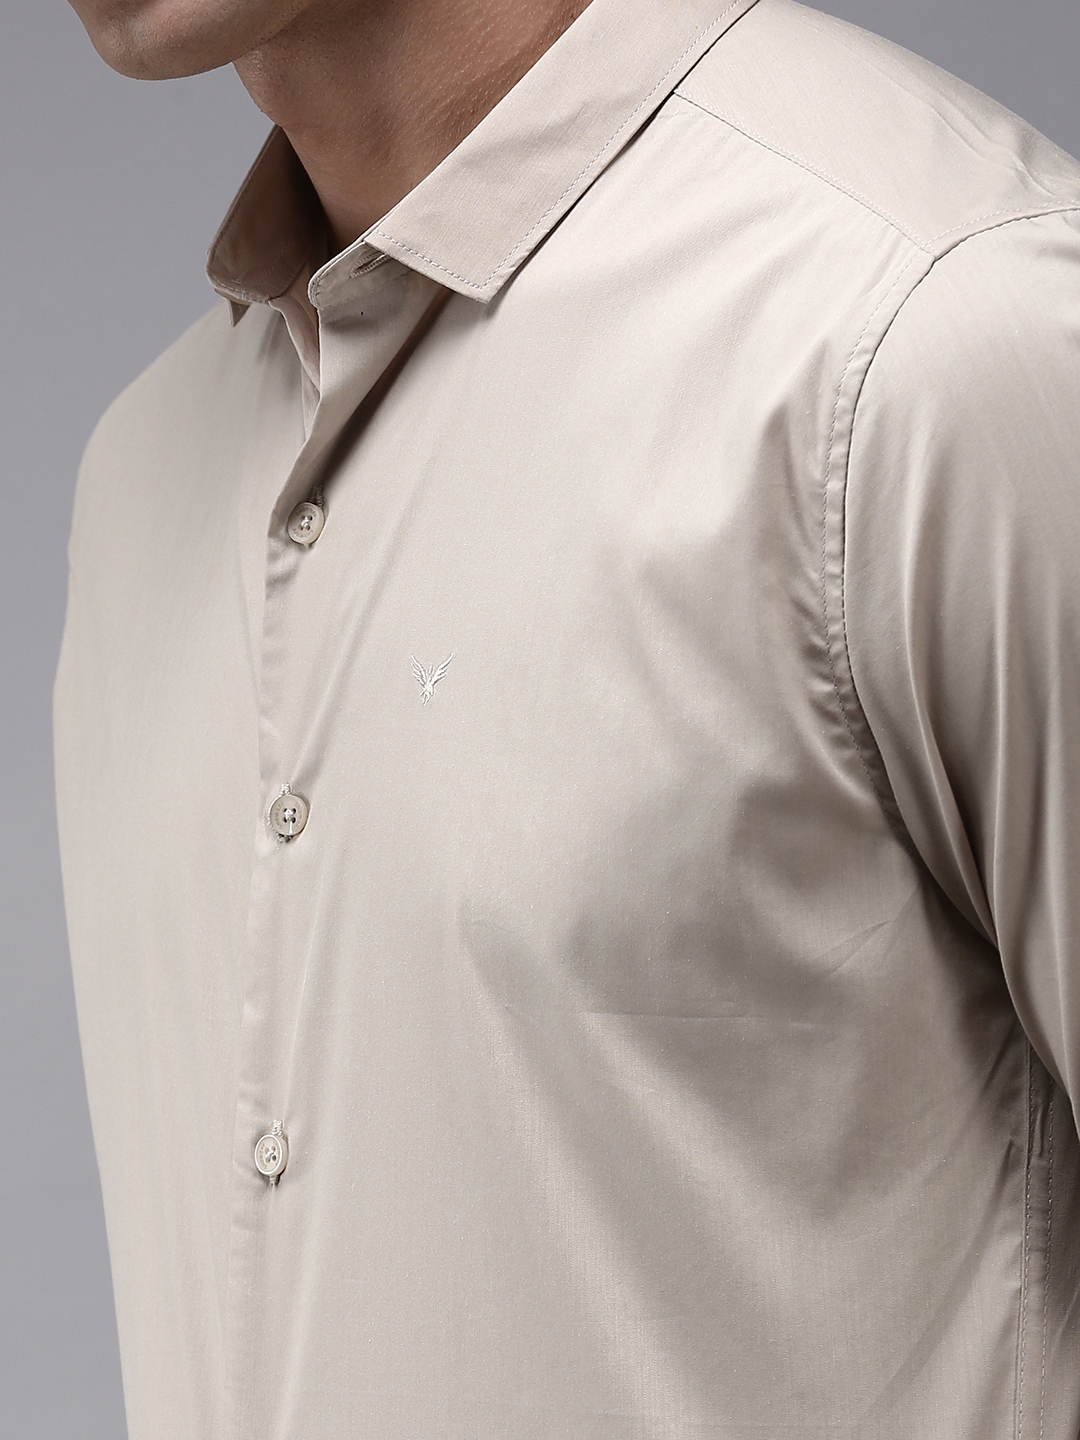 Men's Beige Cotton Solid Casual Shirts